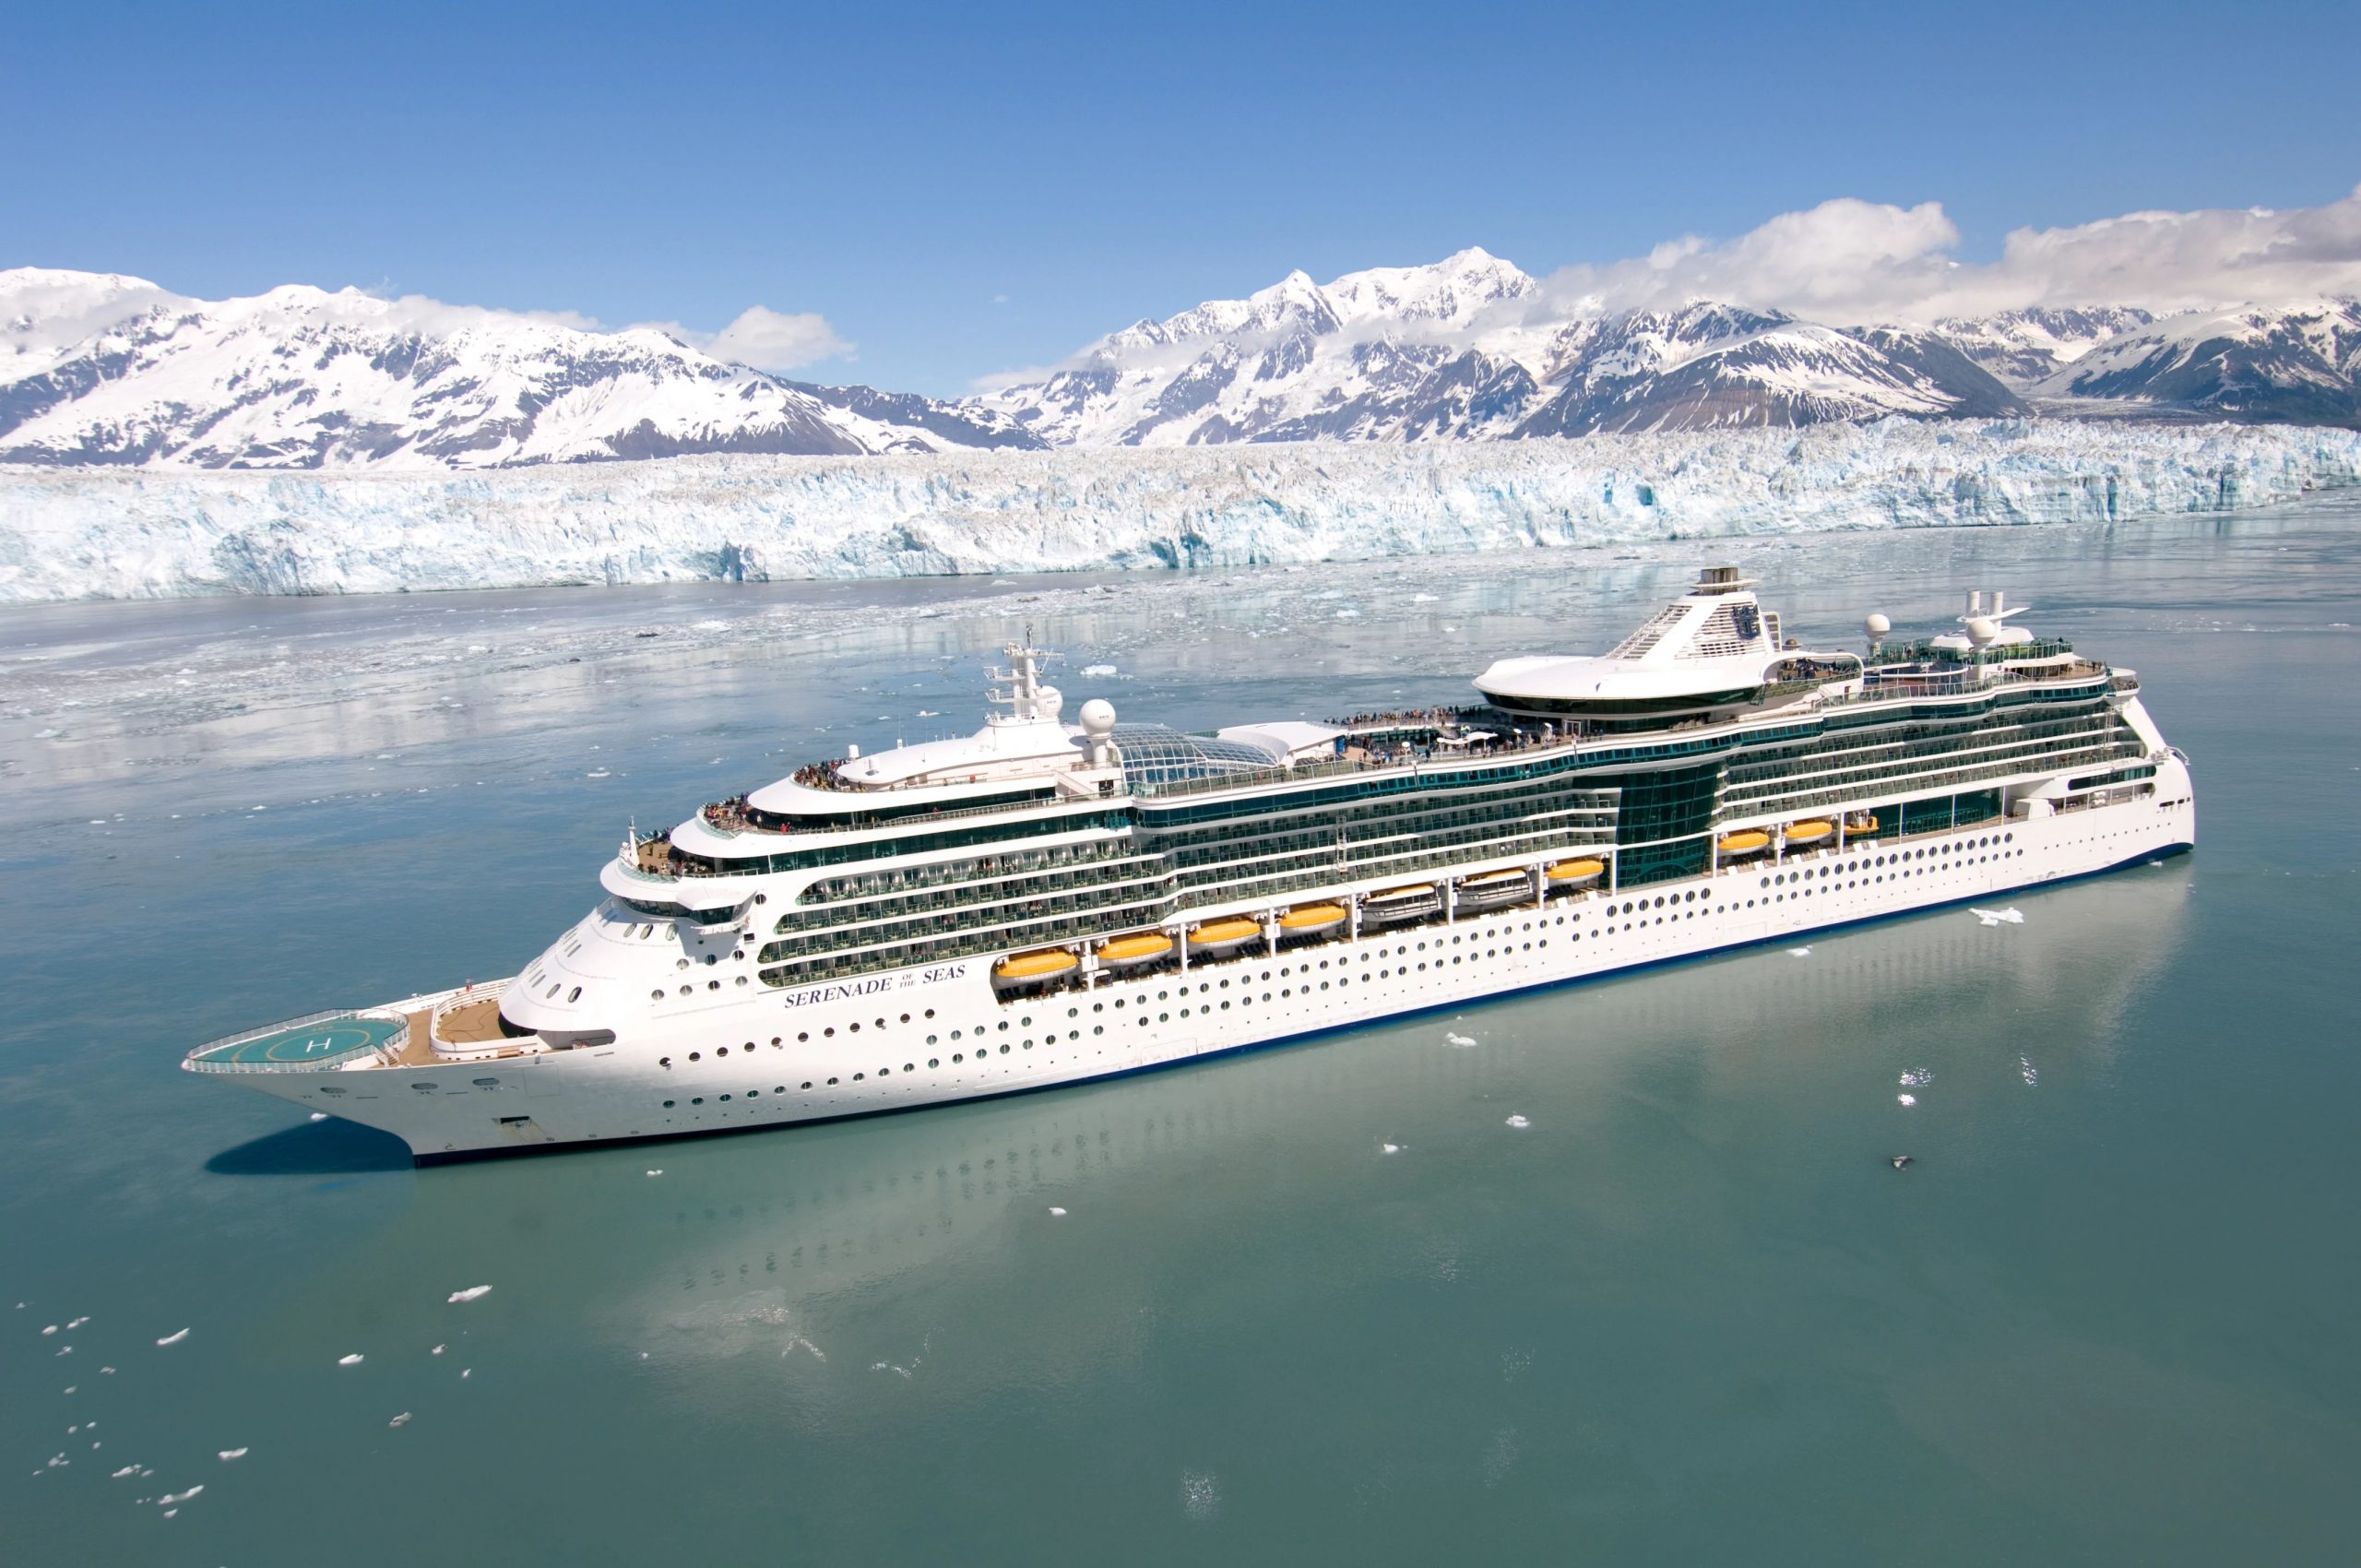 Cruise Ships – Introducing Royal Caribbean’s Radiance Class Cruise Ships